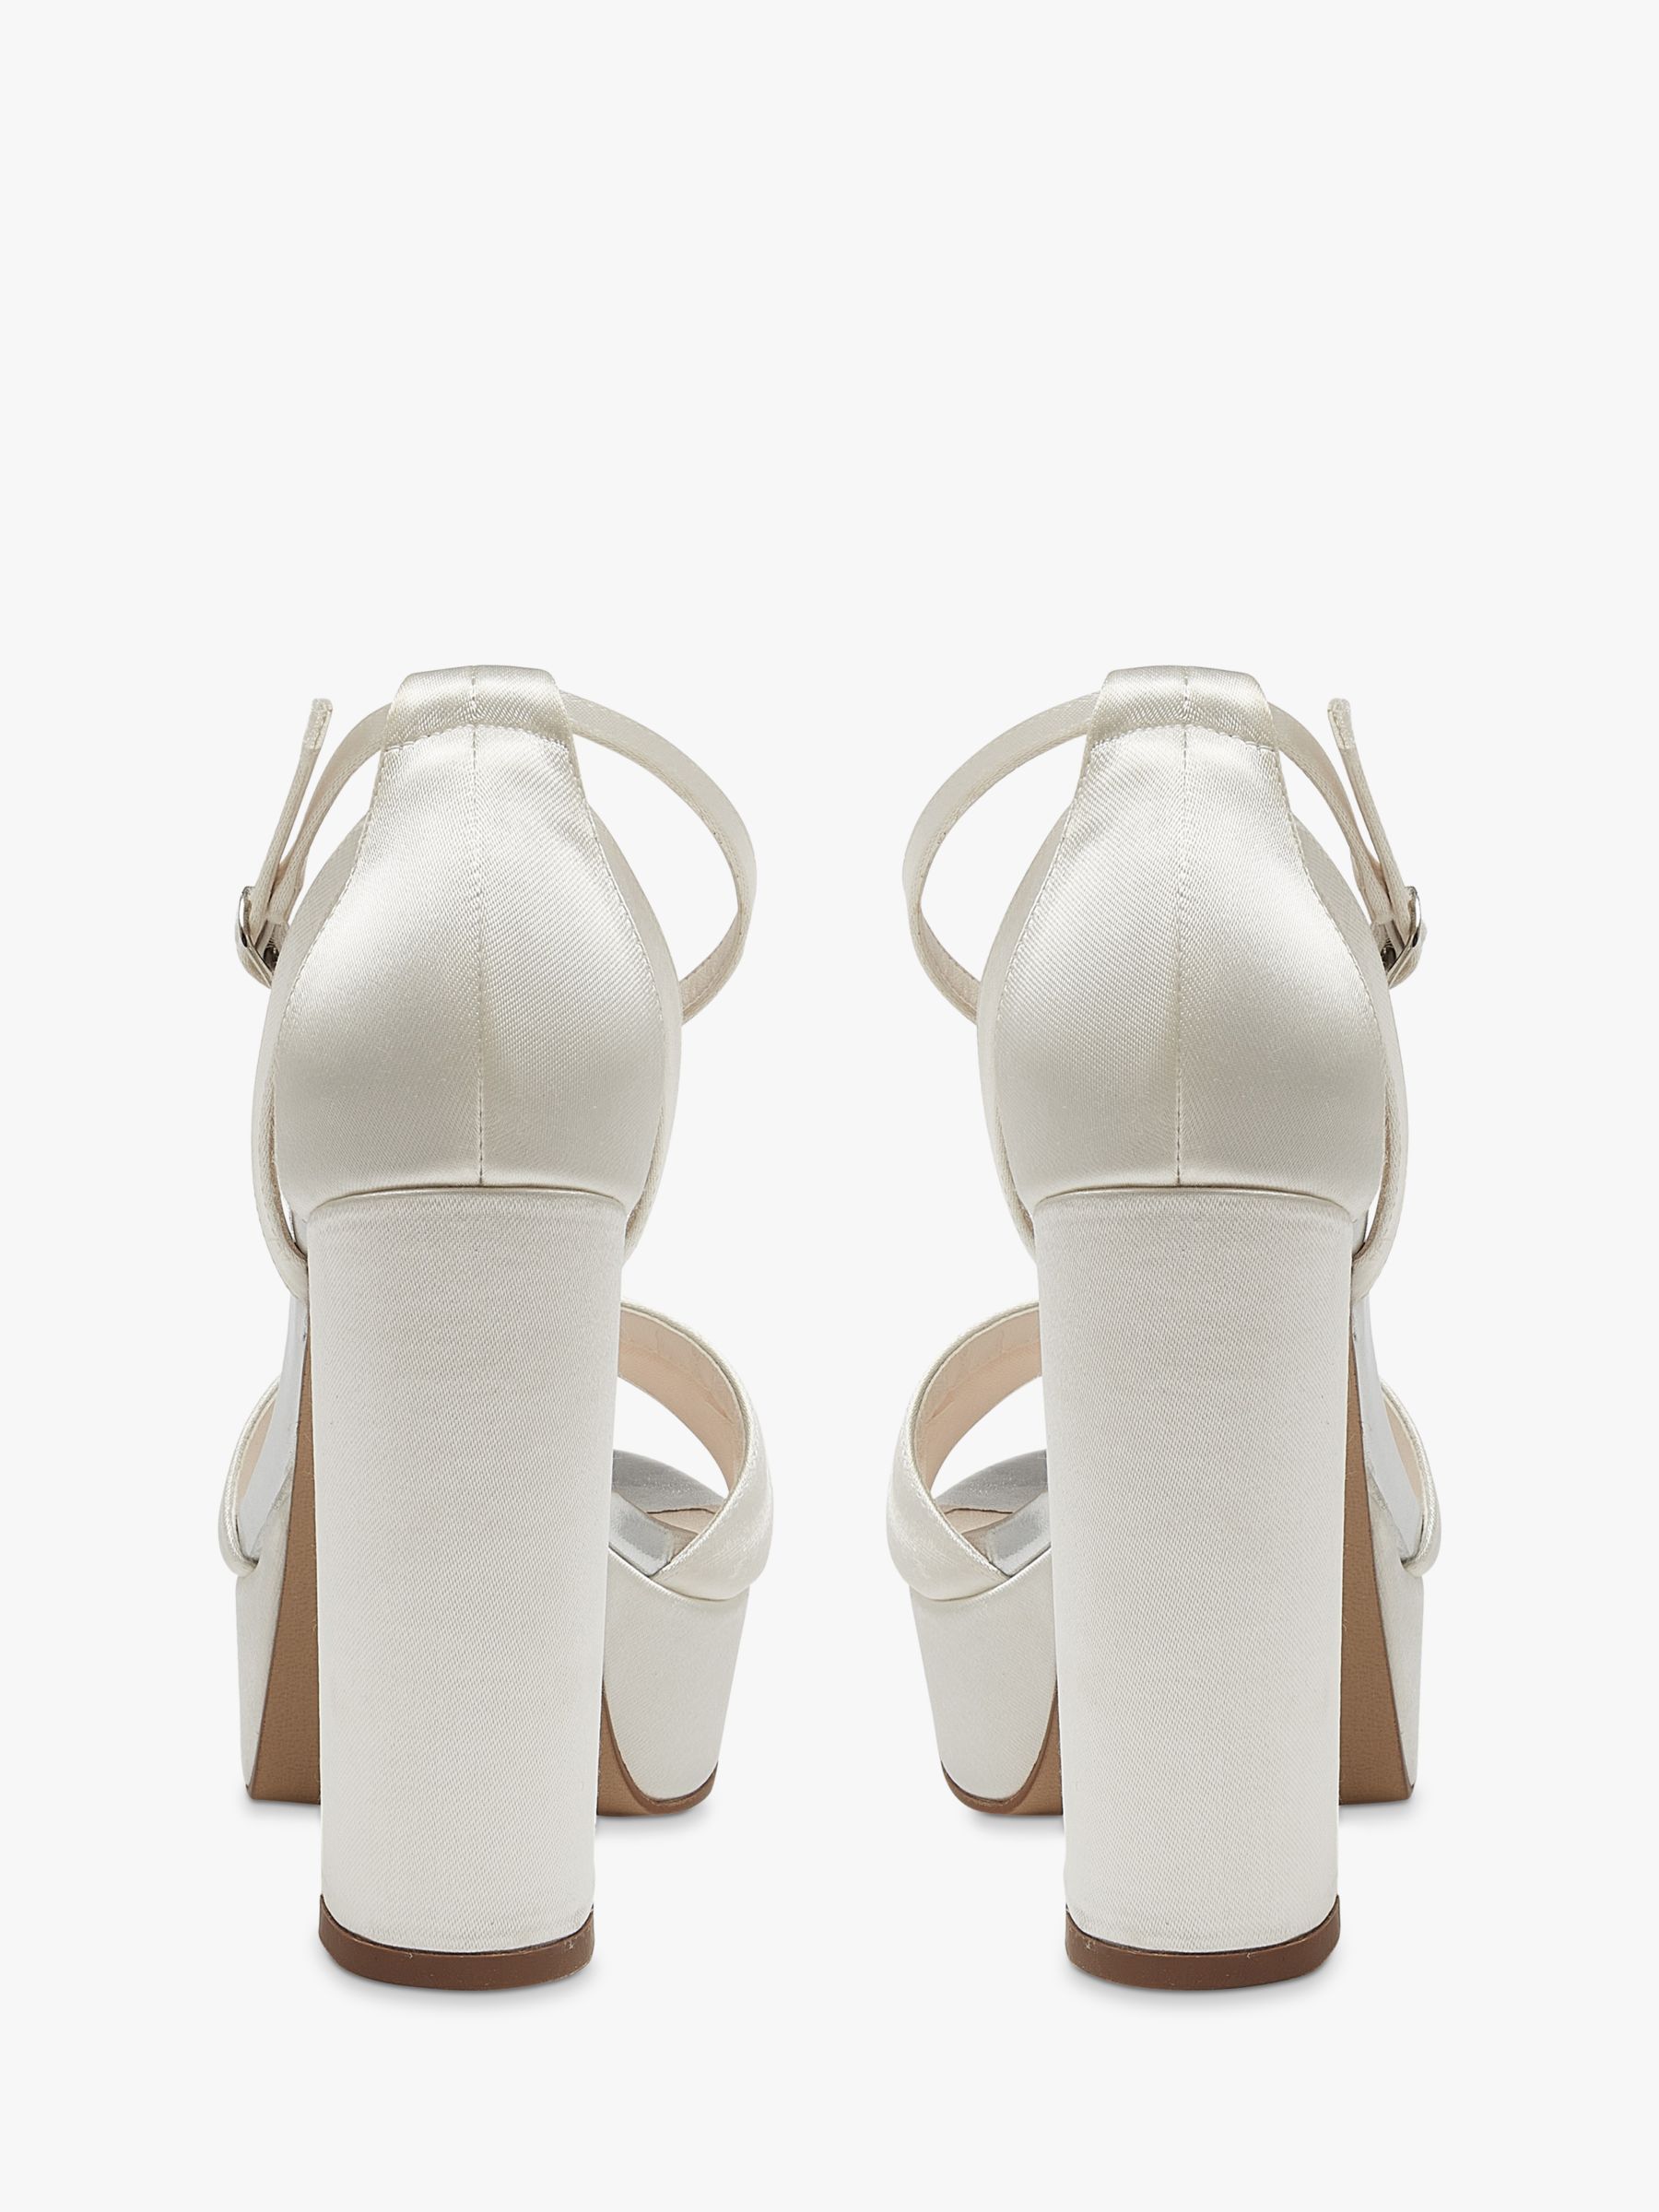 Rainbow Club Gracie Platform Wedding Sandals, Ivory Satin, 4